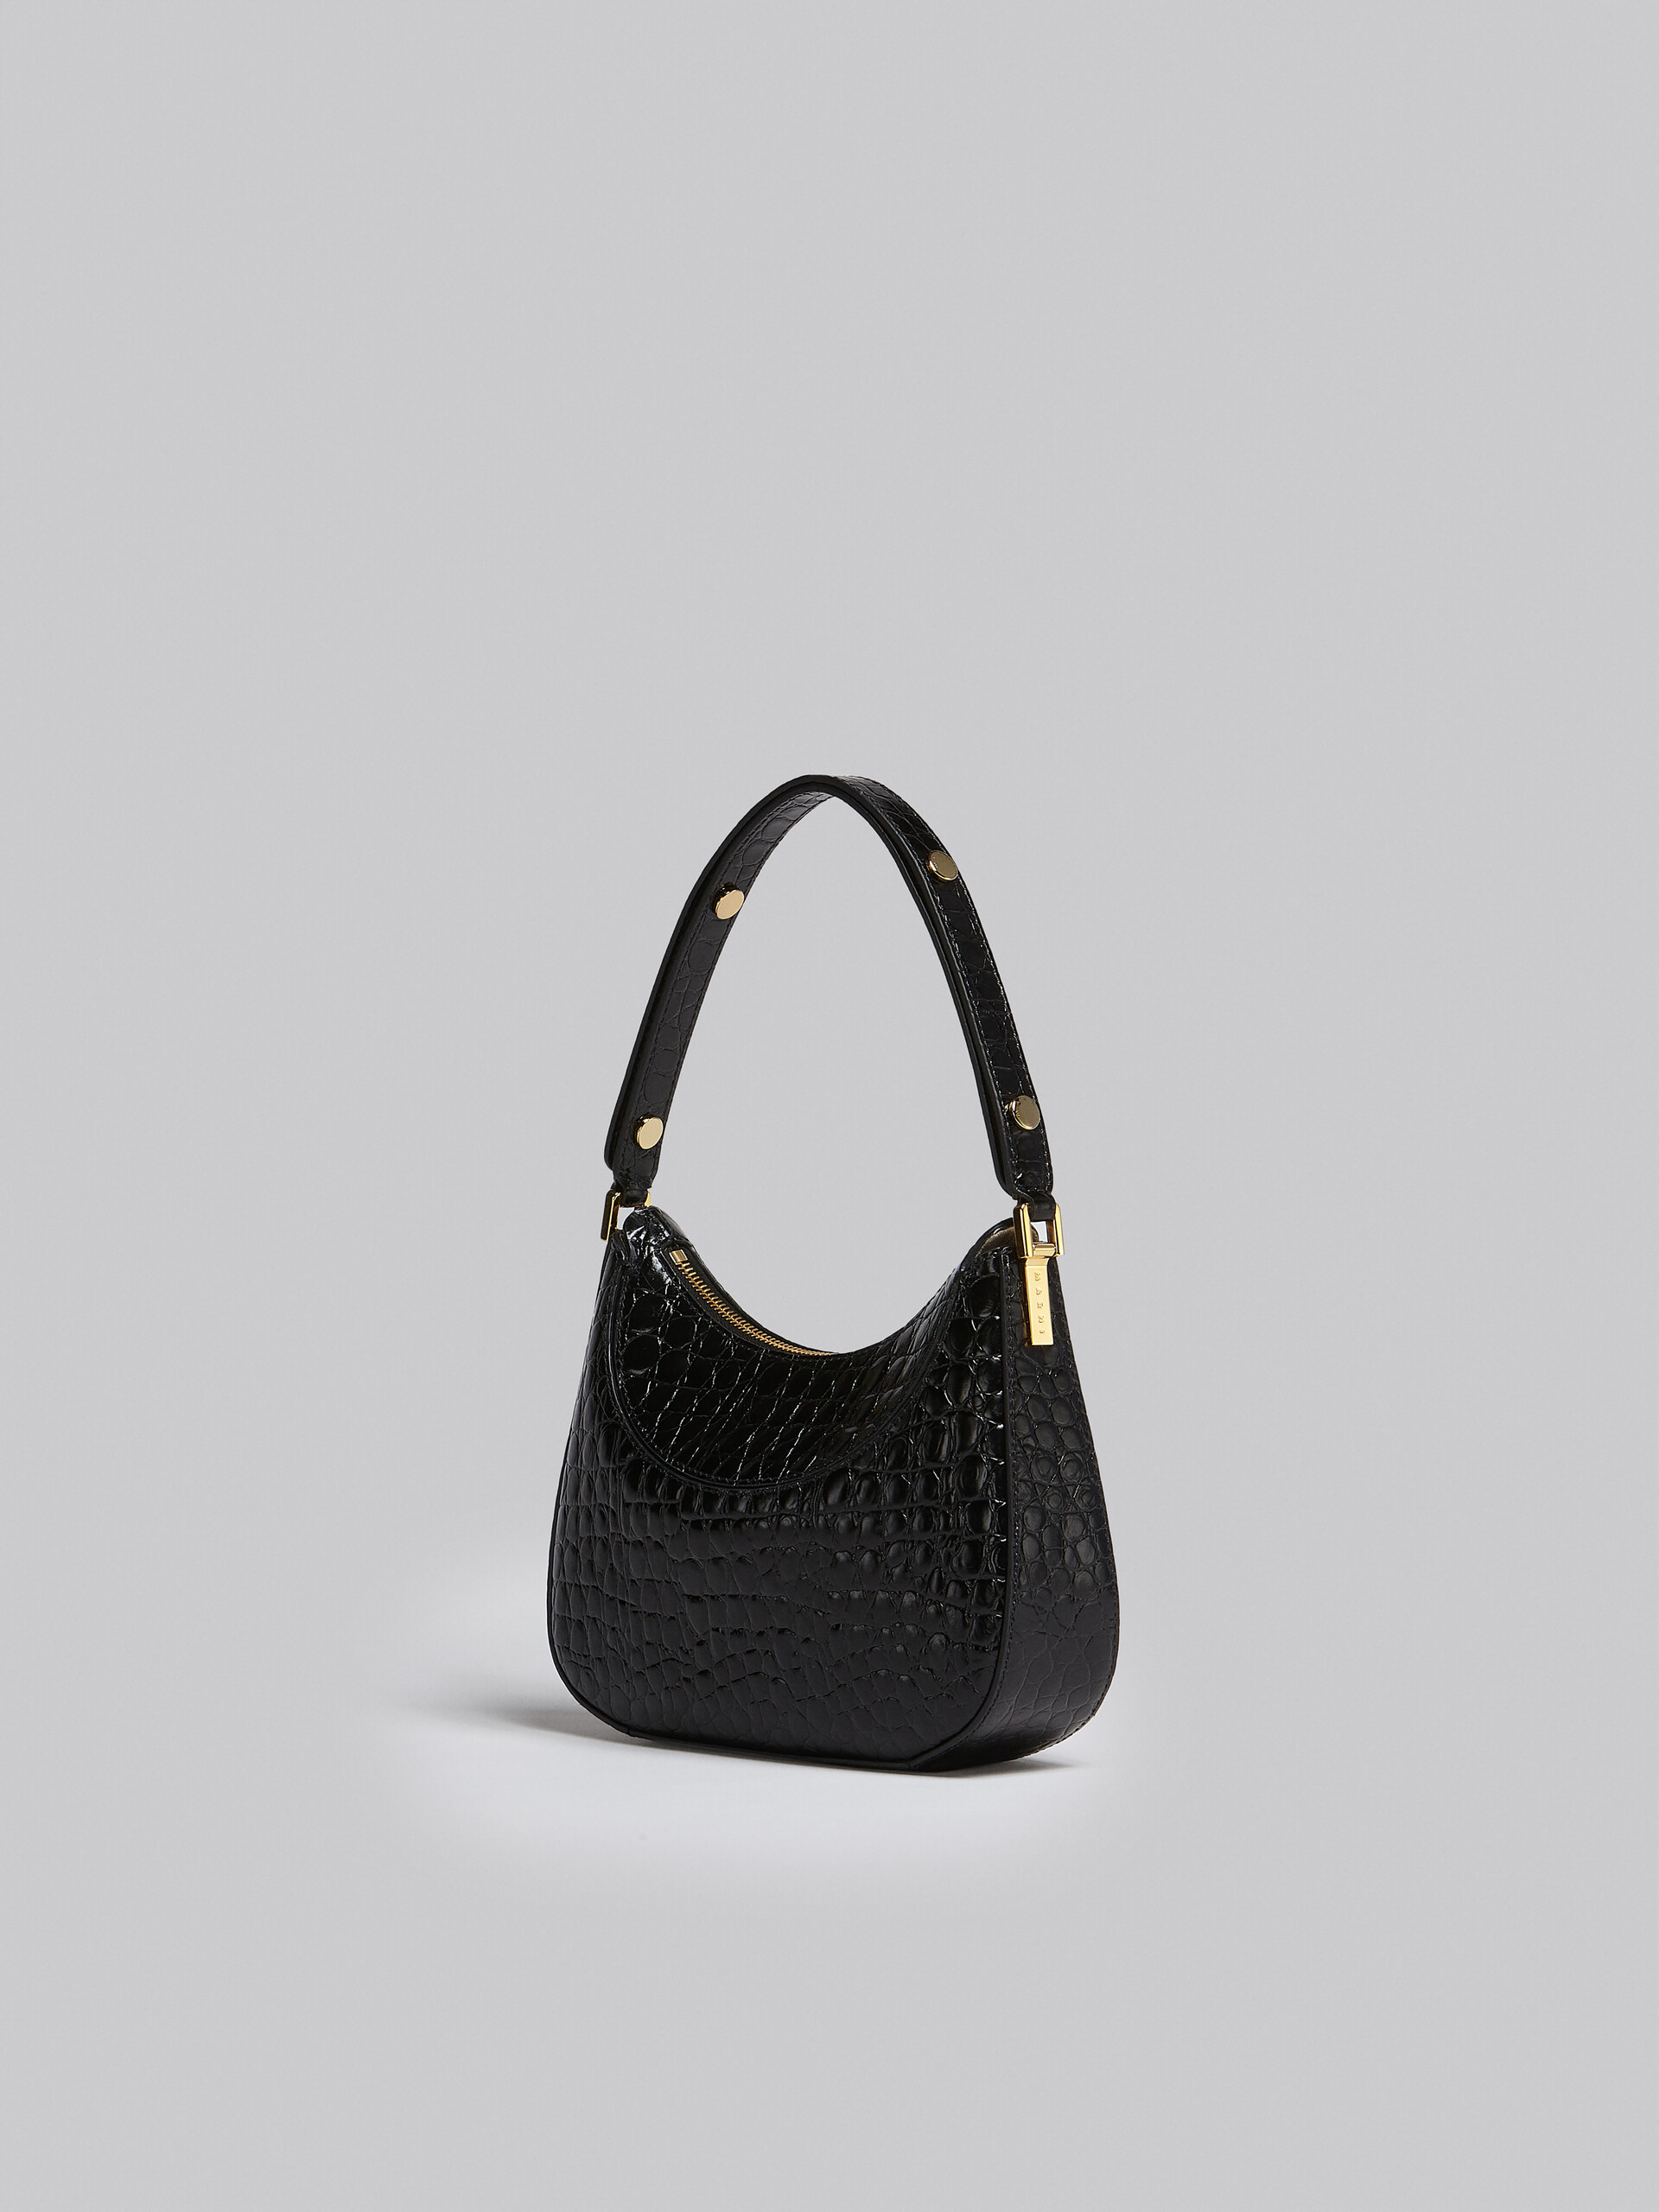 Milano Mini Bag in black croco print leather - Handbags - Image 2